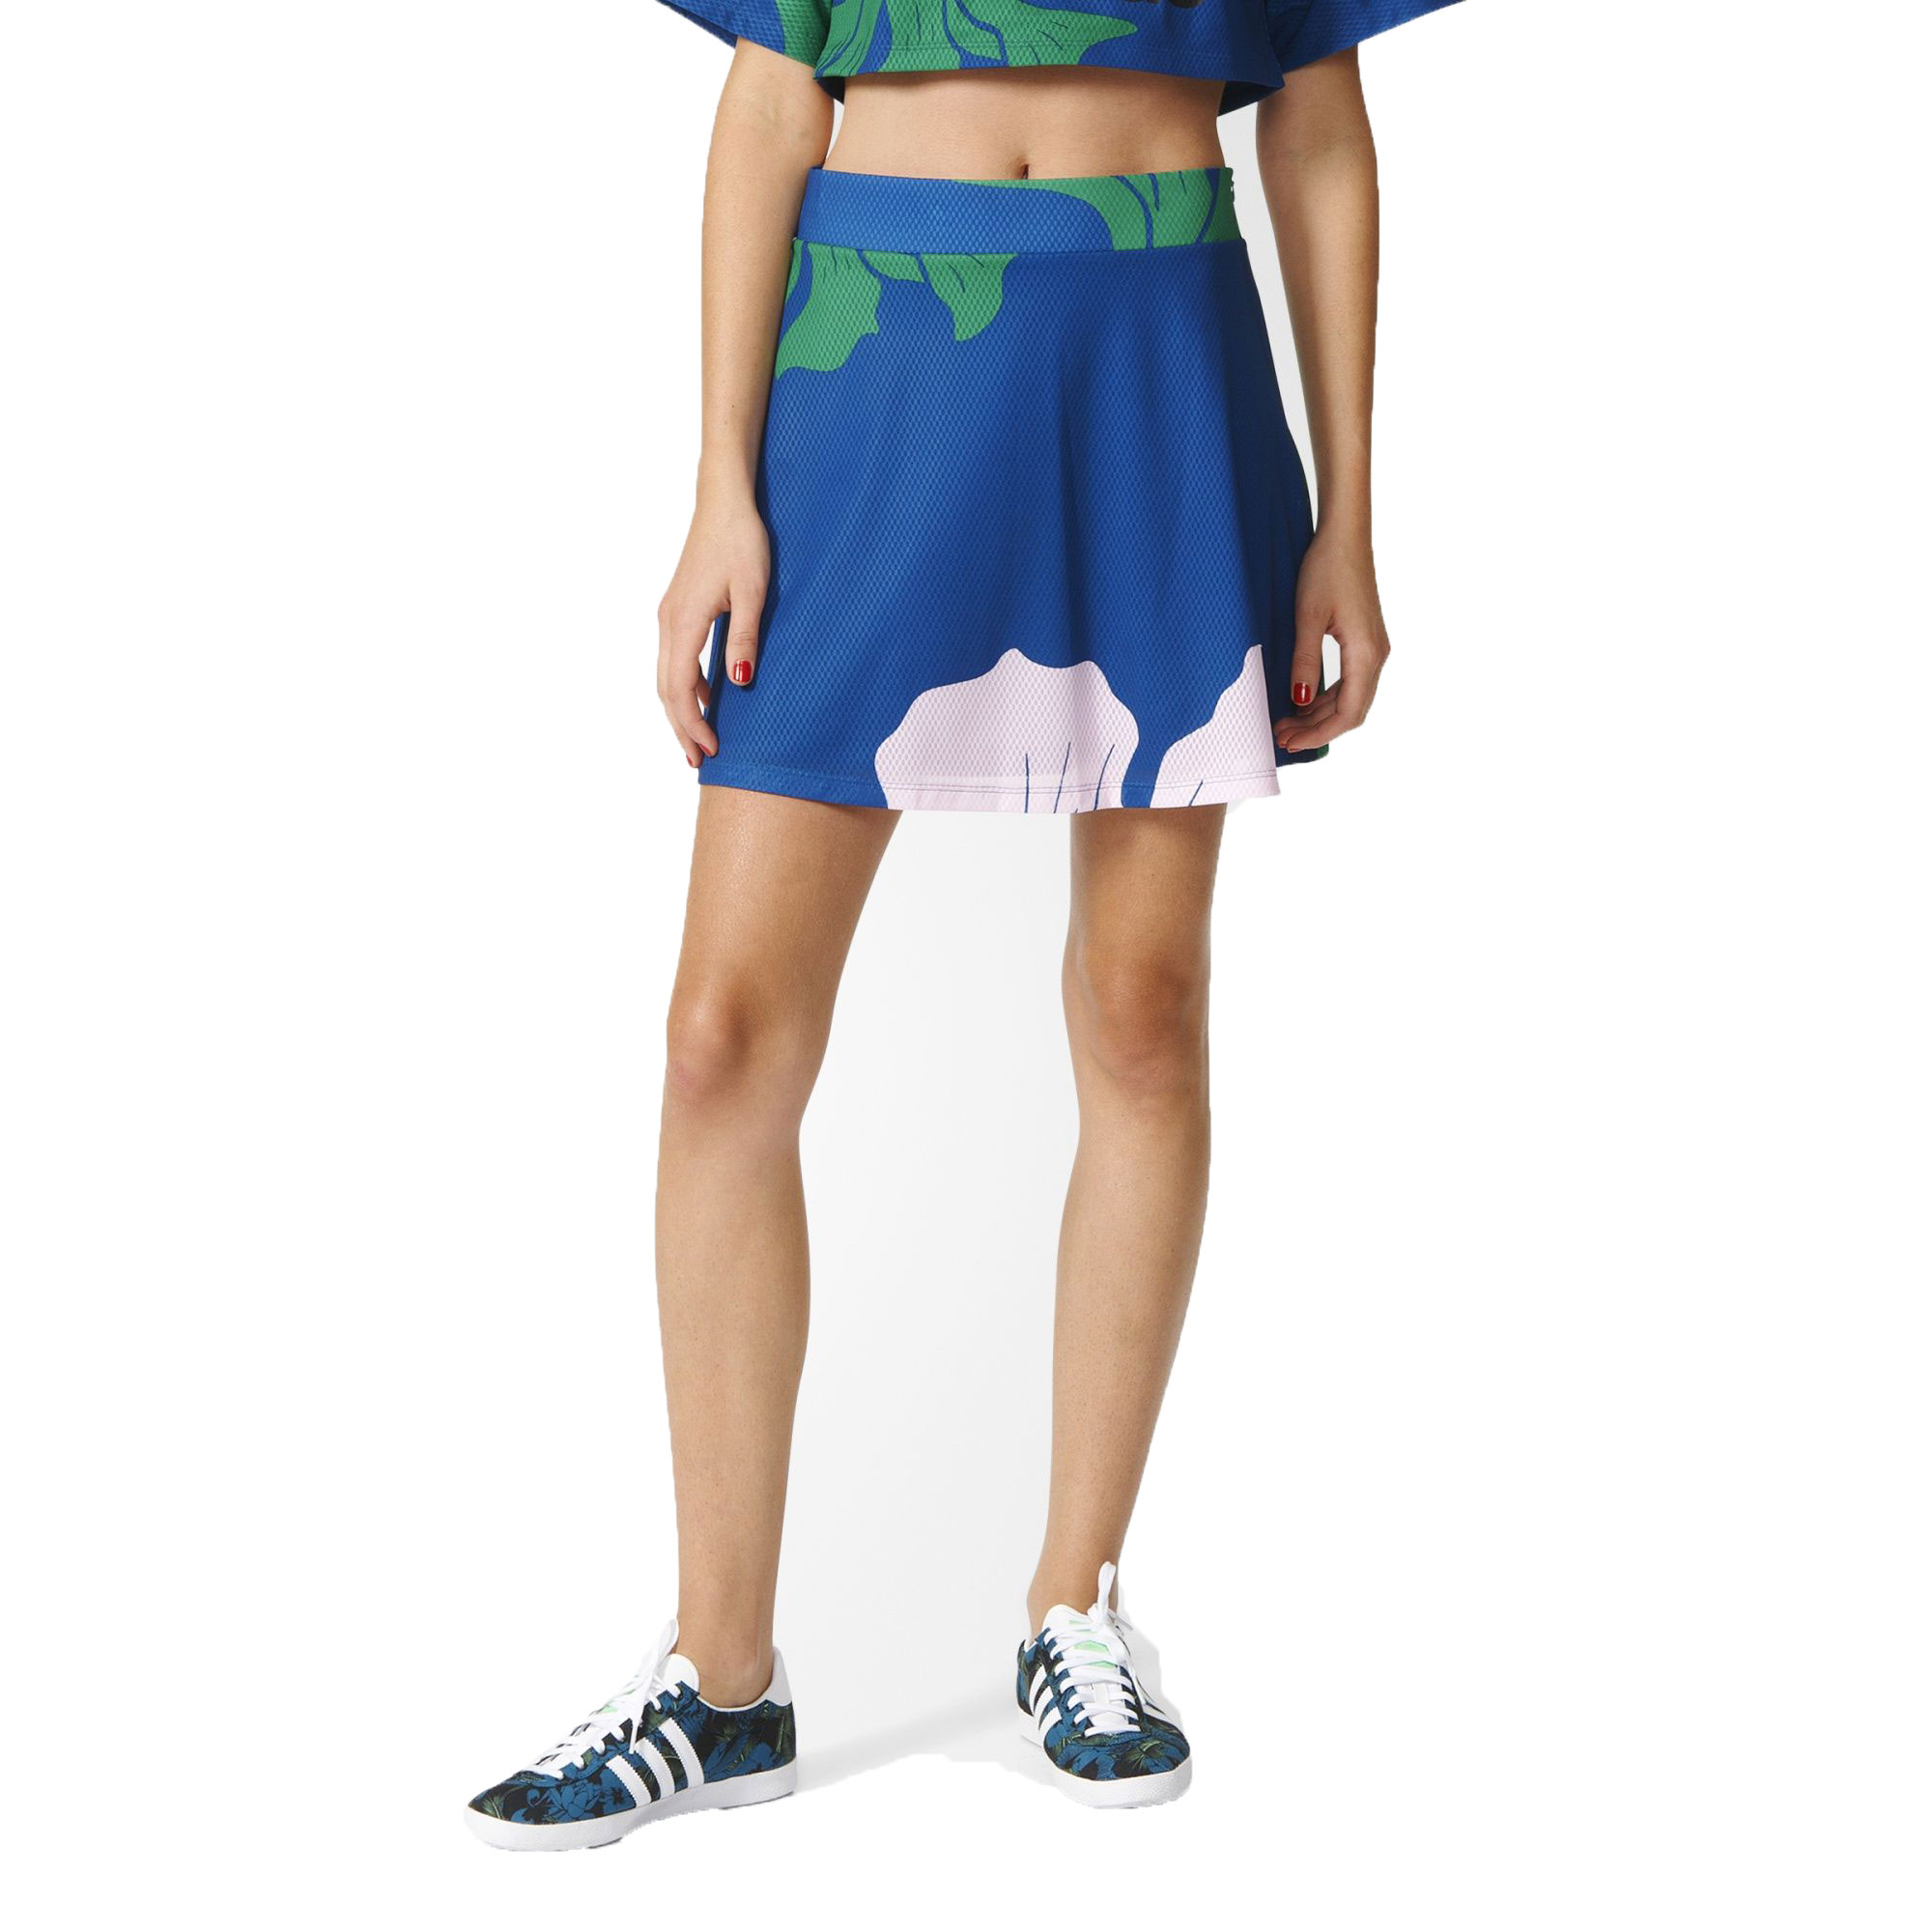 adidas floral skirt